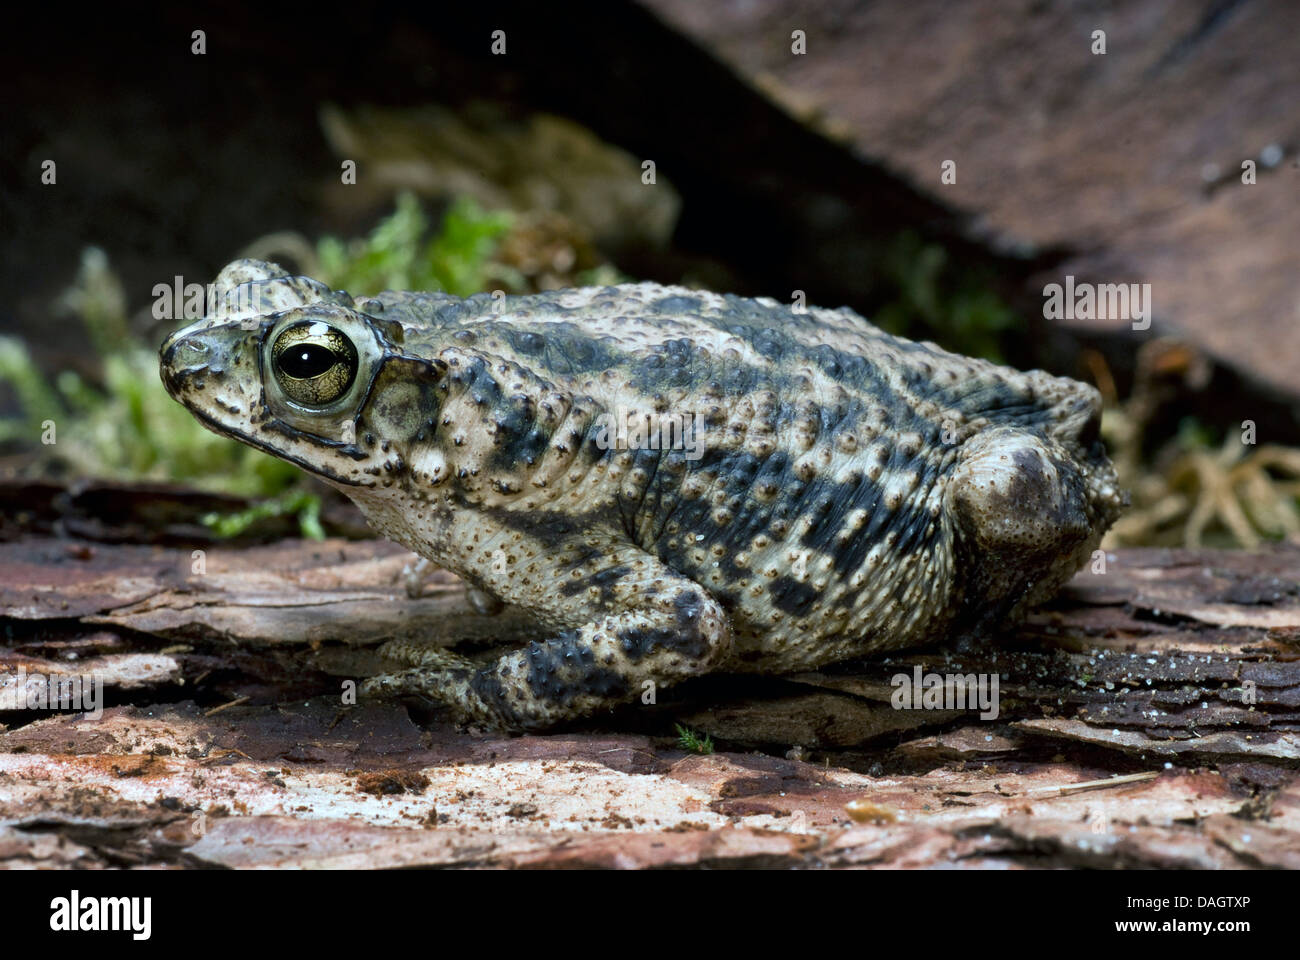 Granular Toad, Granular Sapo (Bufo granulosus), on a stone next to the water Stock Photo